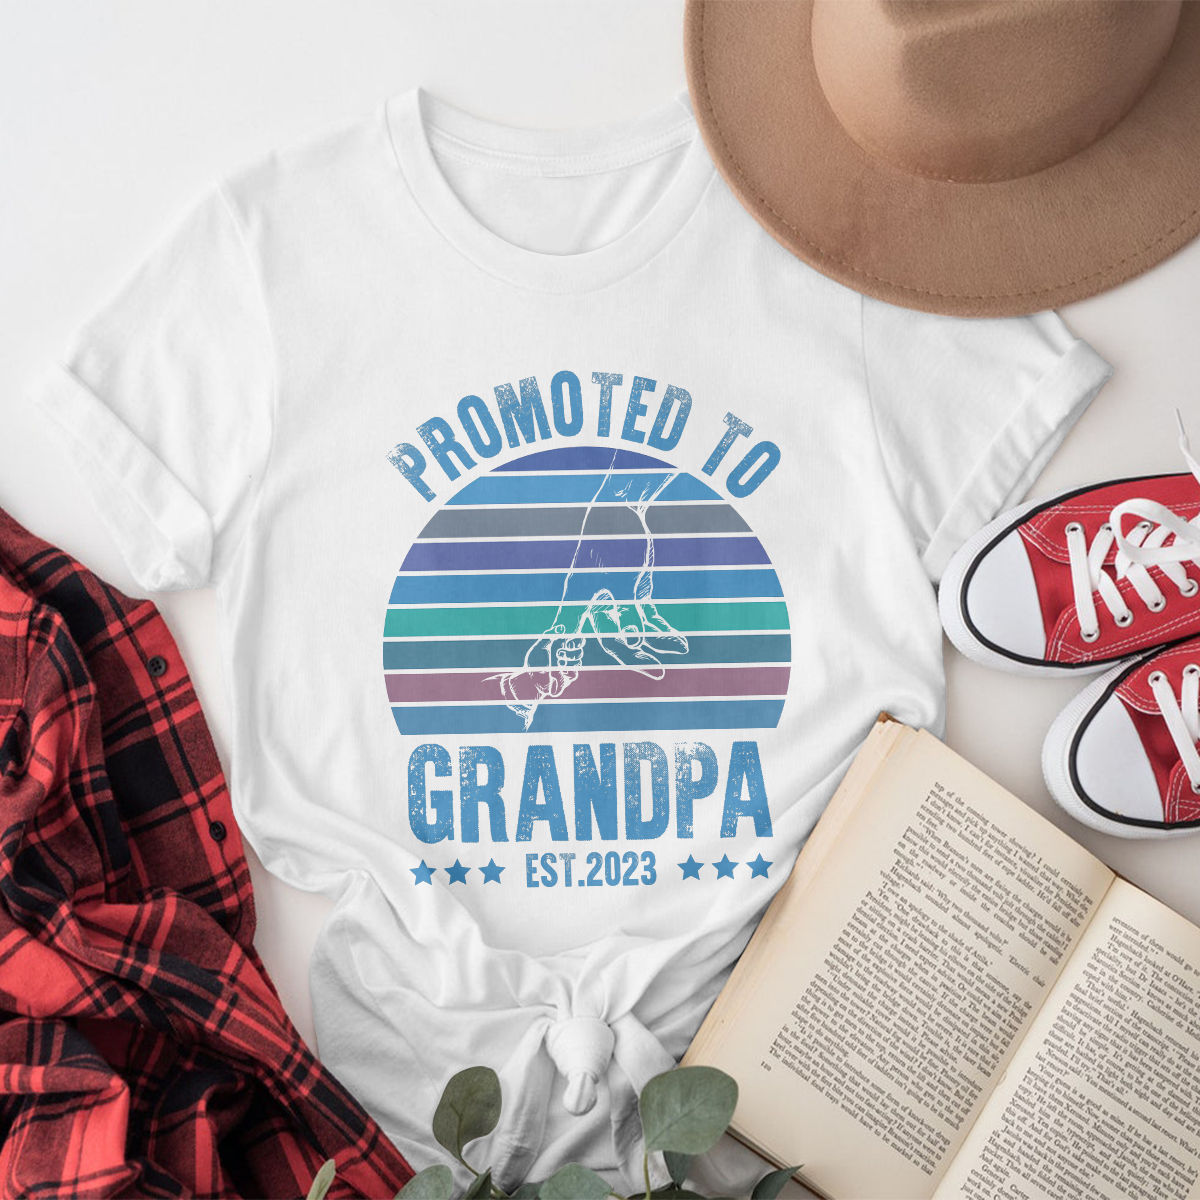 Promoted To Grandpa Shirt, Love Grandpa Shirt, Family Shirt